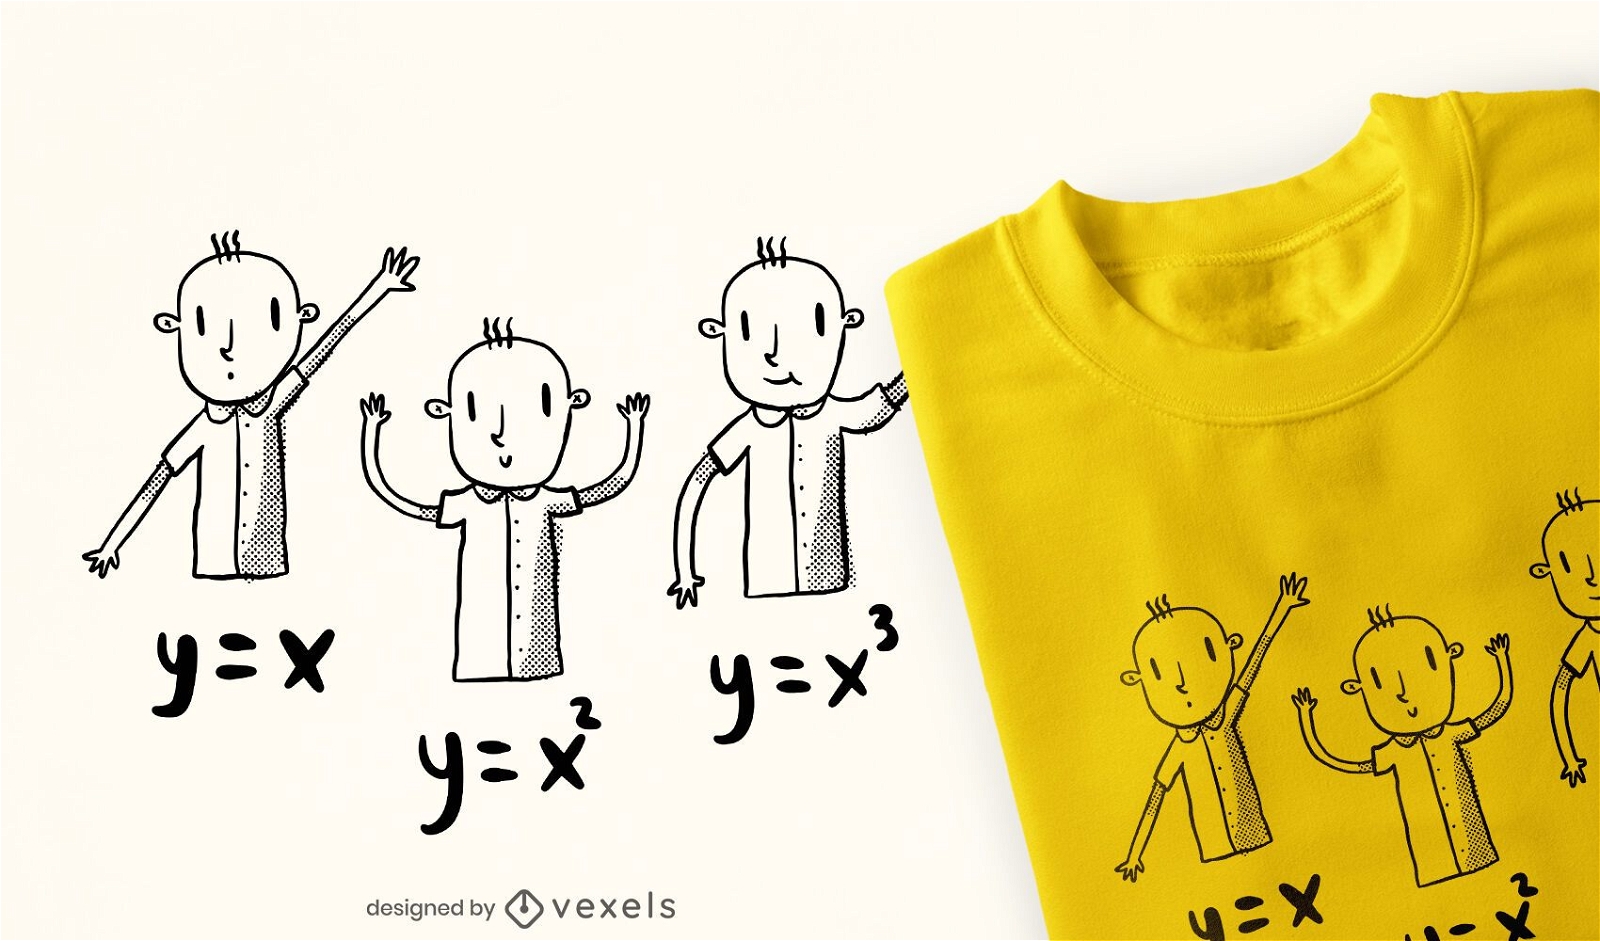 Dise?o de camiseta de doodle de ni?os de ecuaciones matem?ticas